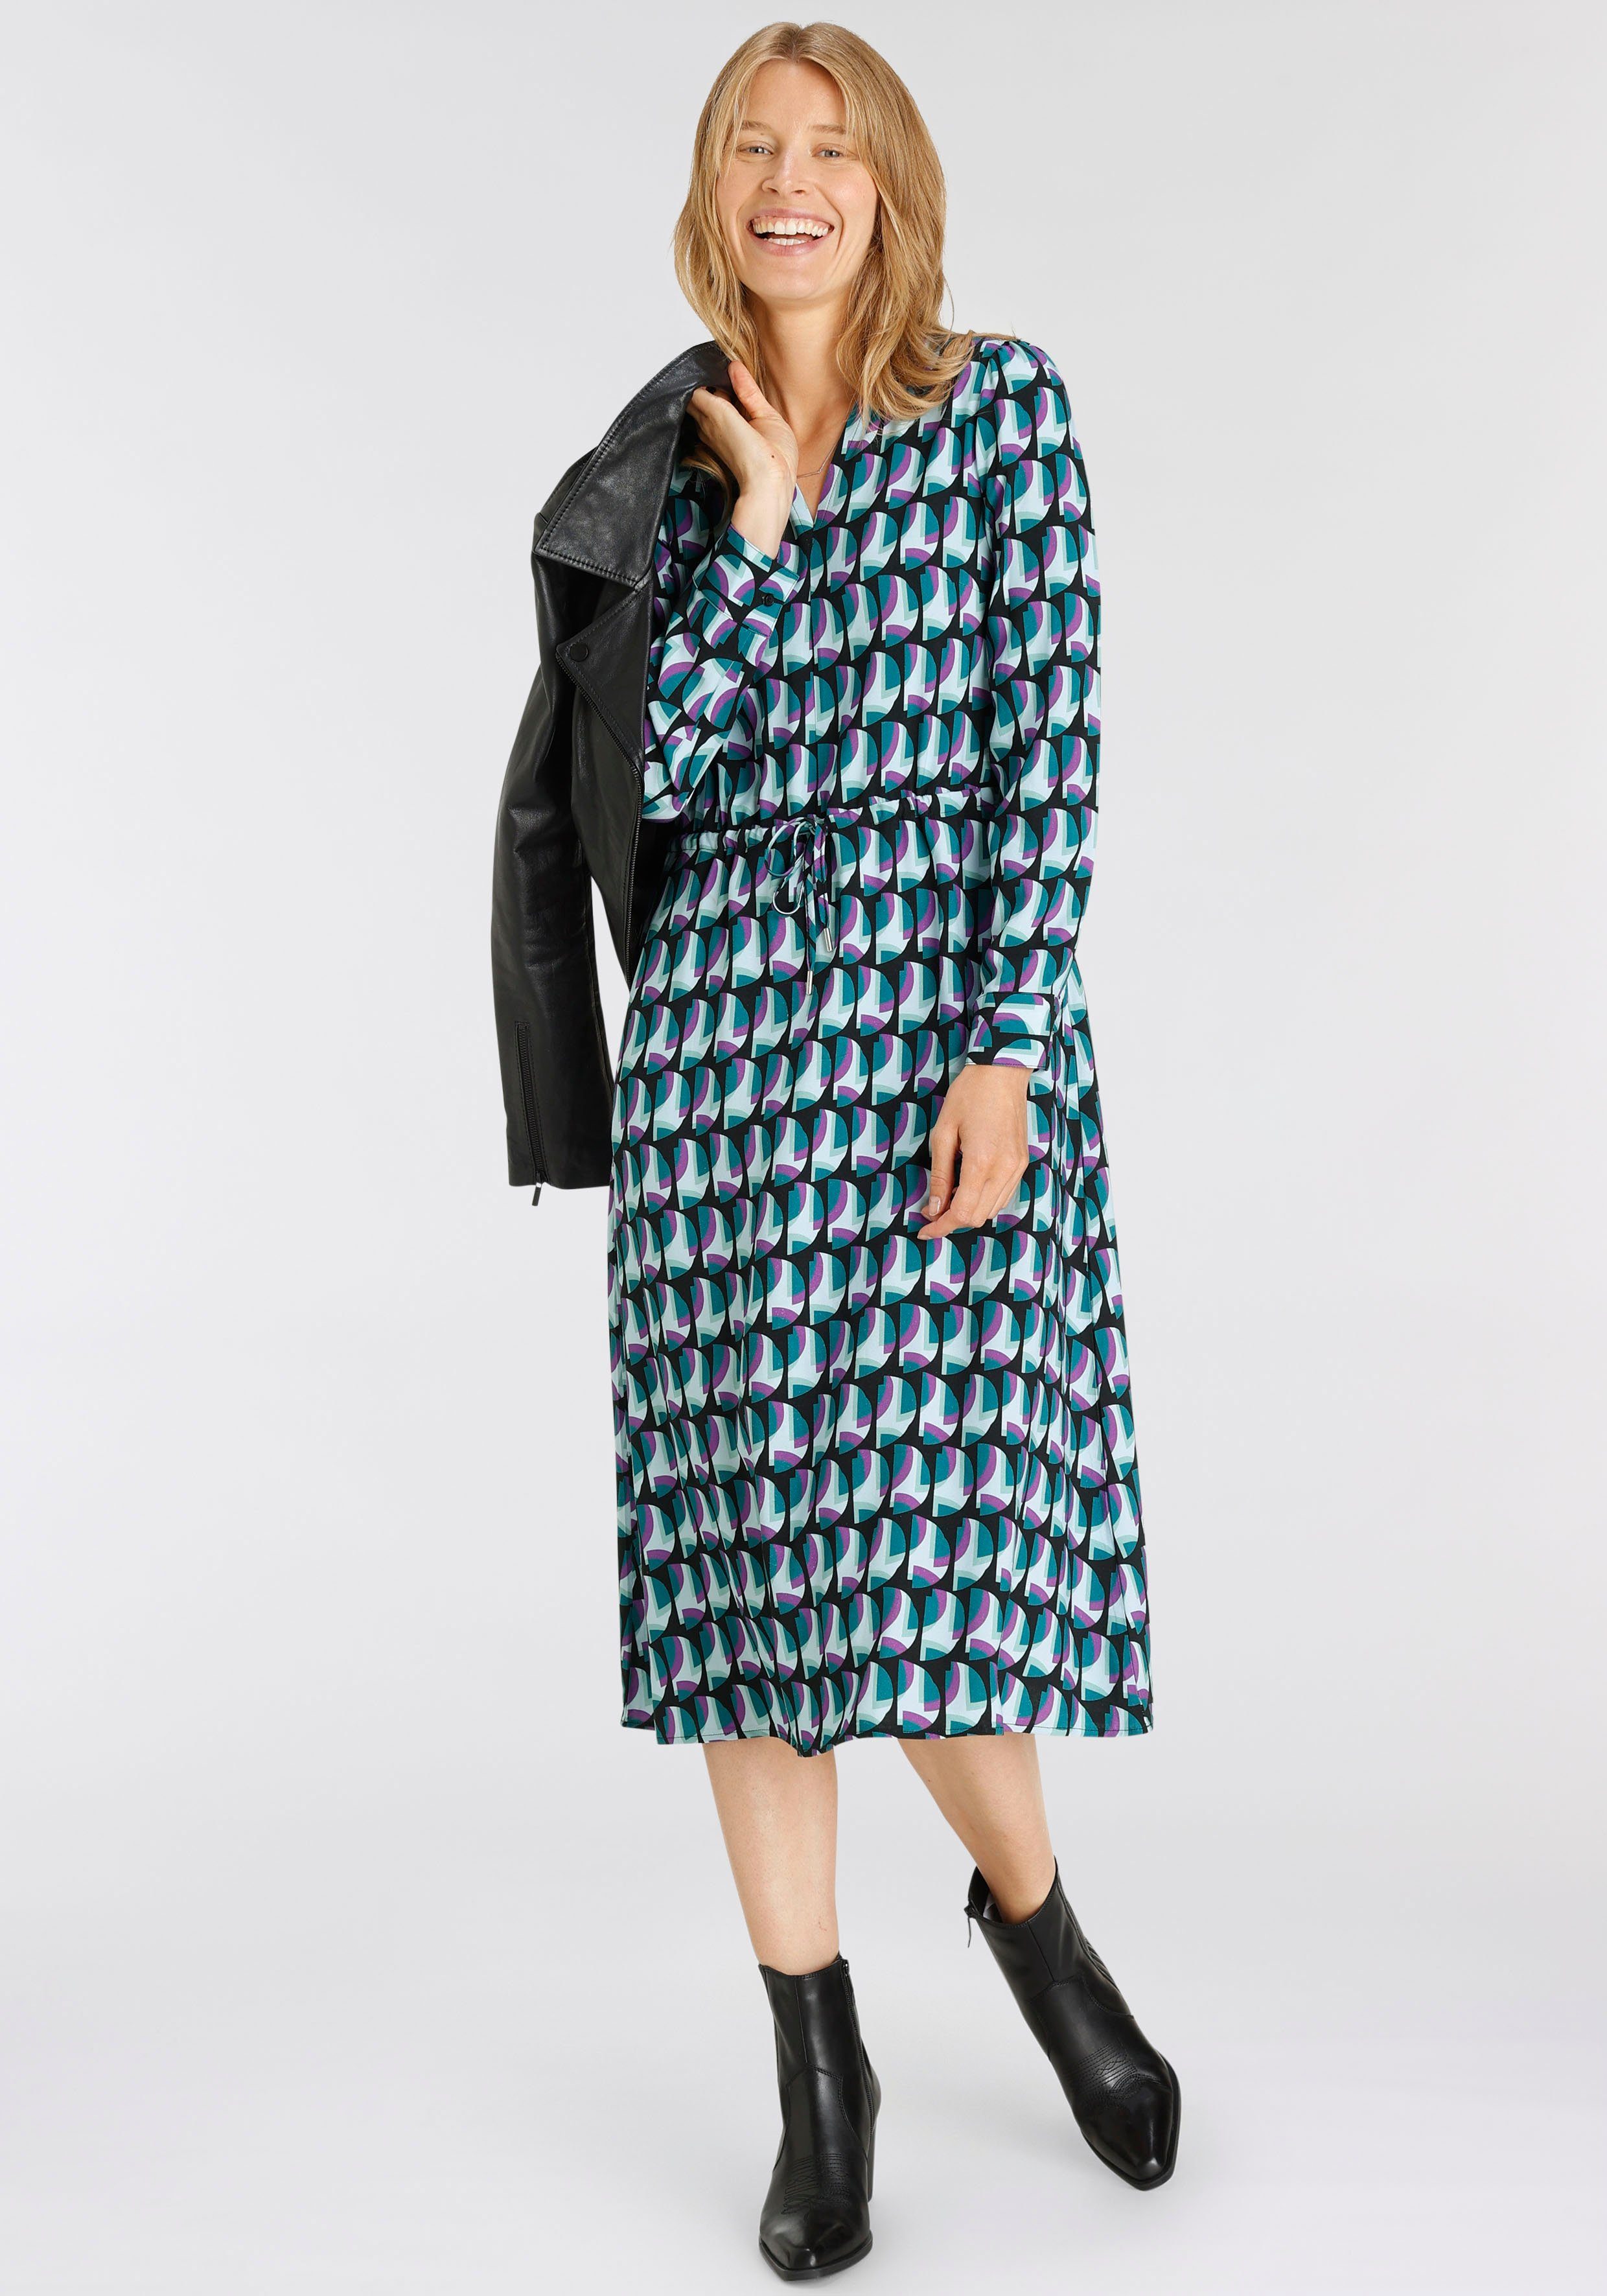 HECHTER PARIS Hemdblusenkleid Allover-Print mit elegantem